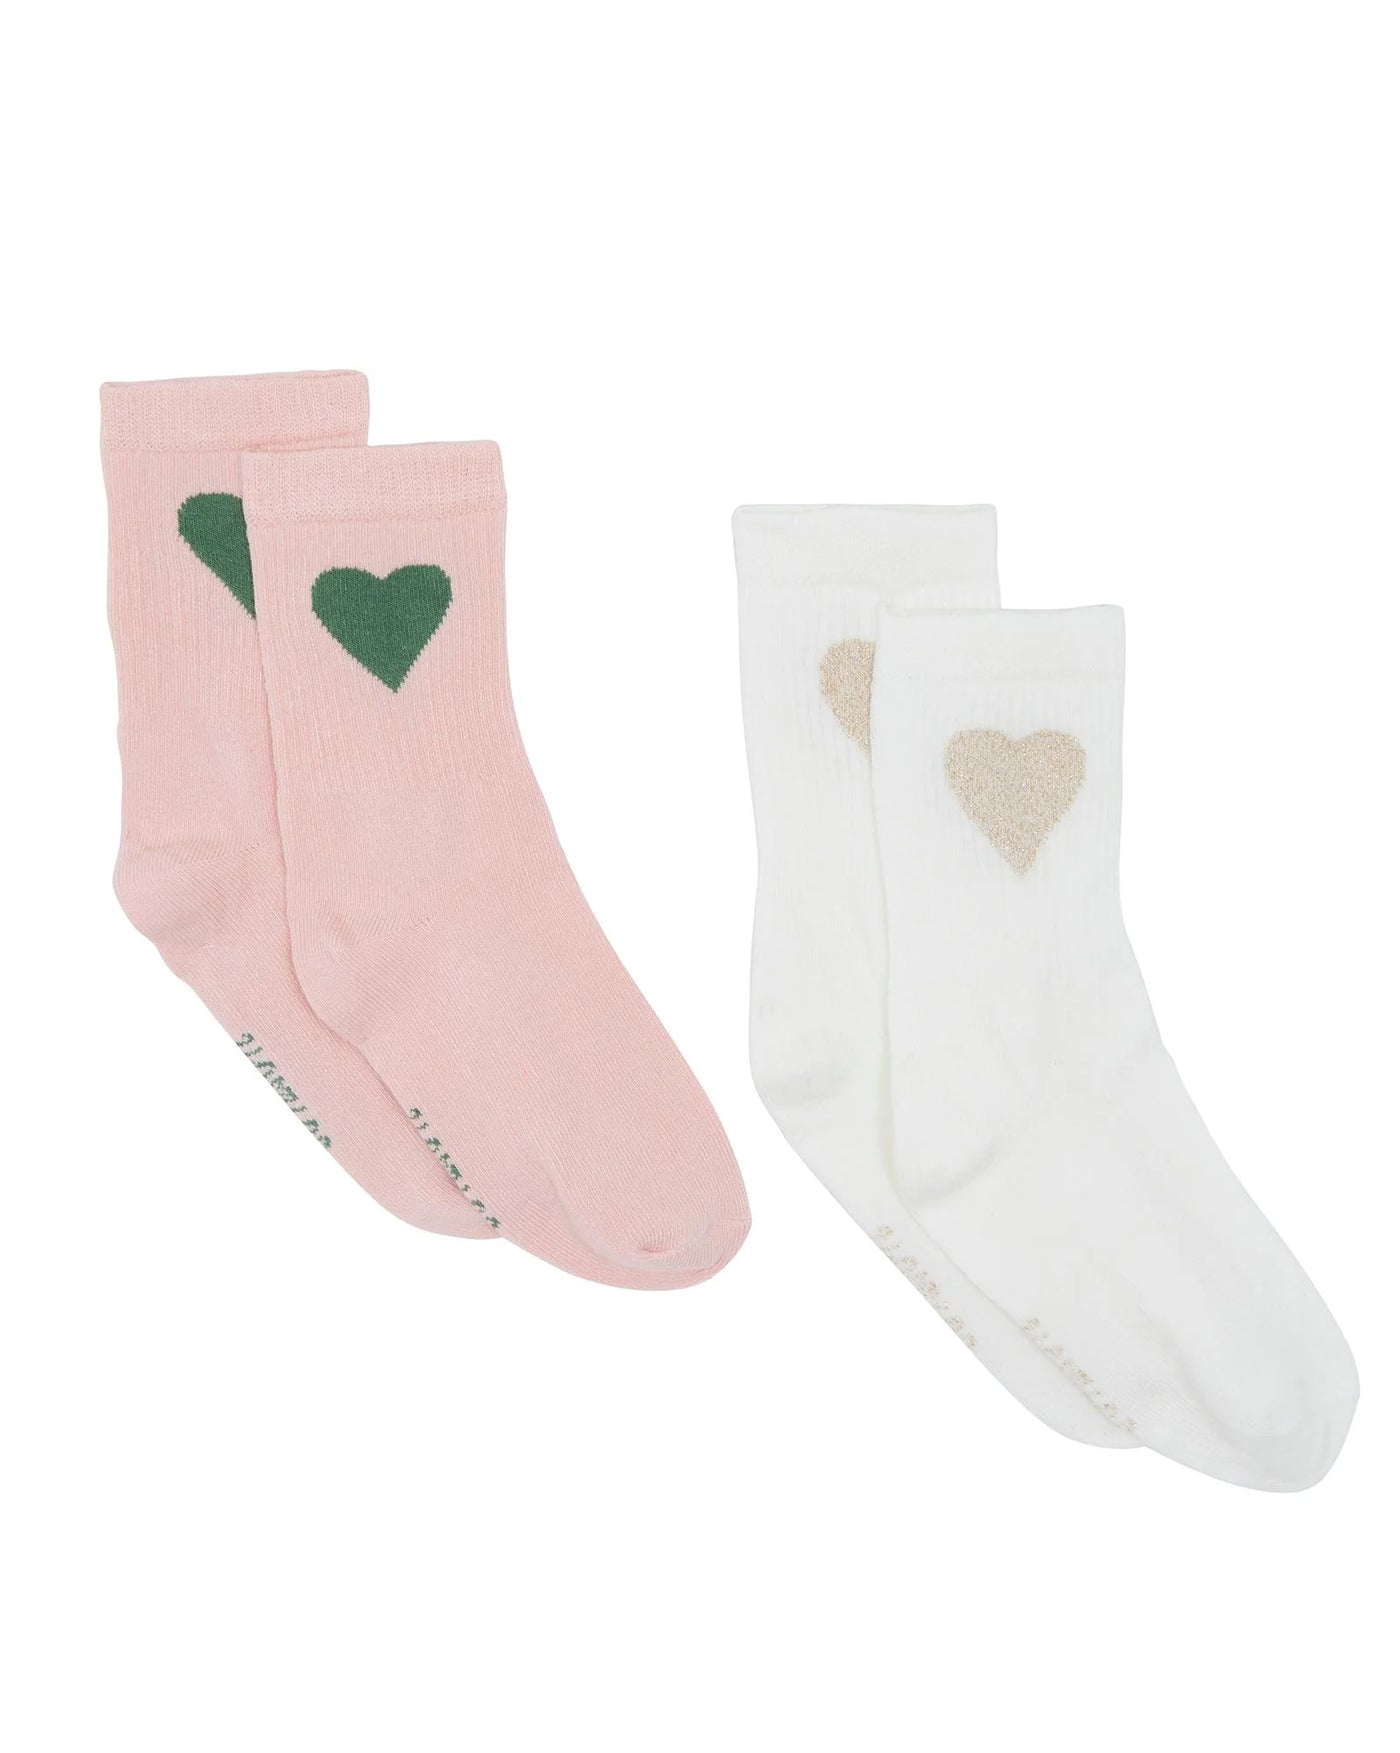 Duo Heart Socks in Creme Bonton